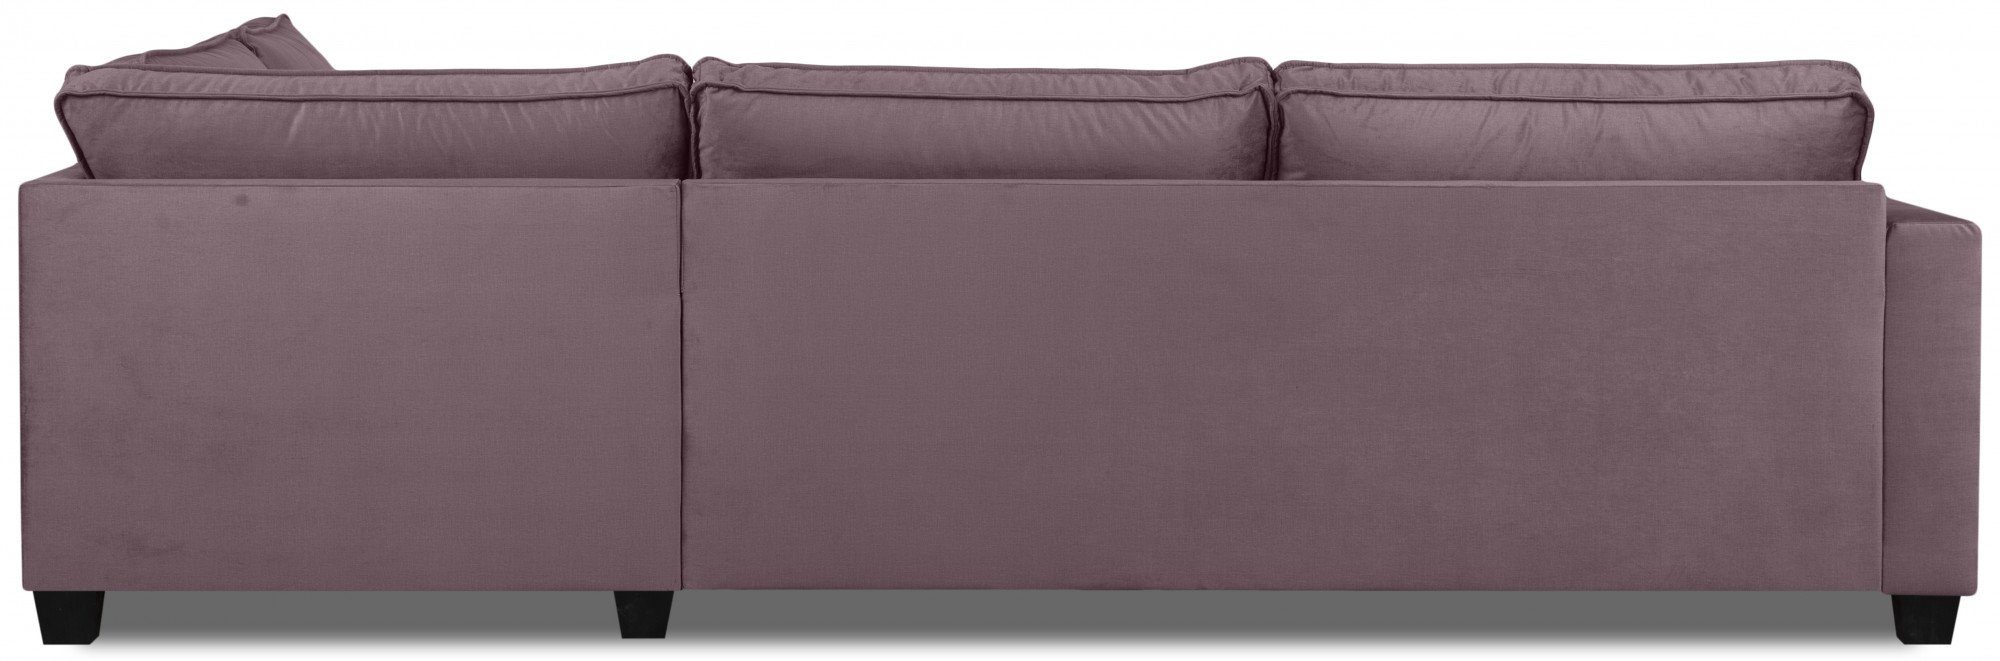 Farben verfügbar viele Tilques, pink Home violet bequeme Sitzgelegenheiten, Ecksofa affaire